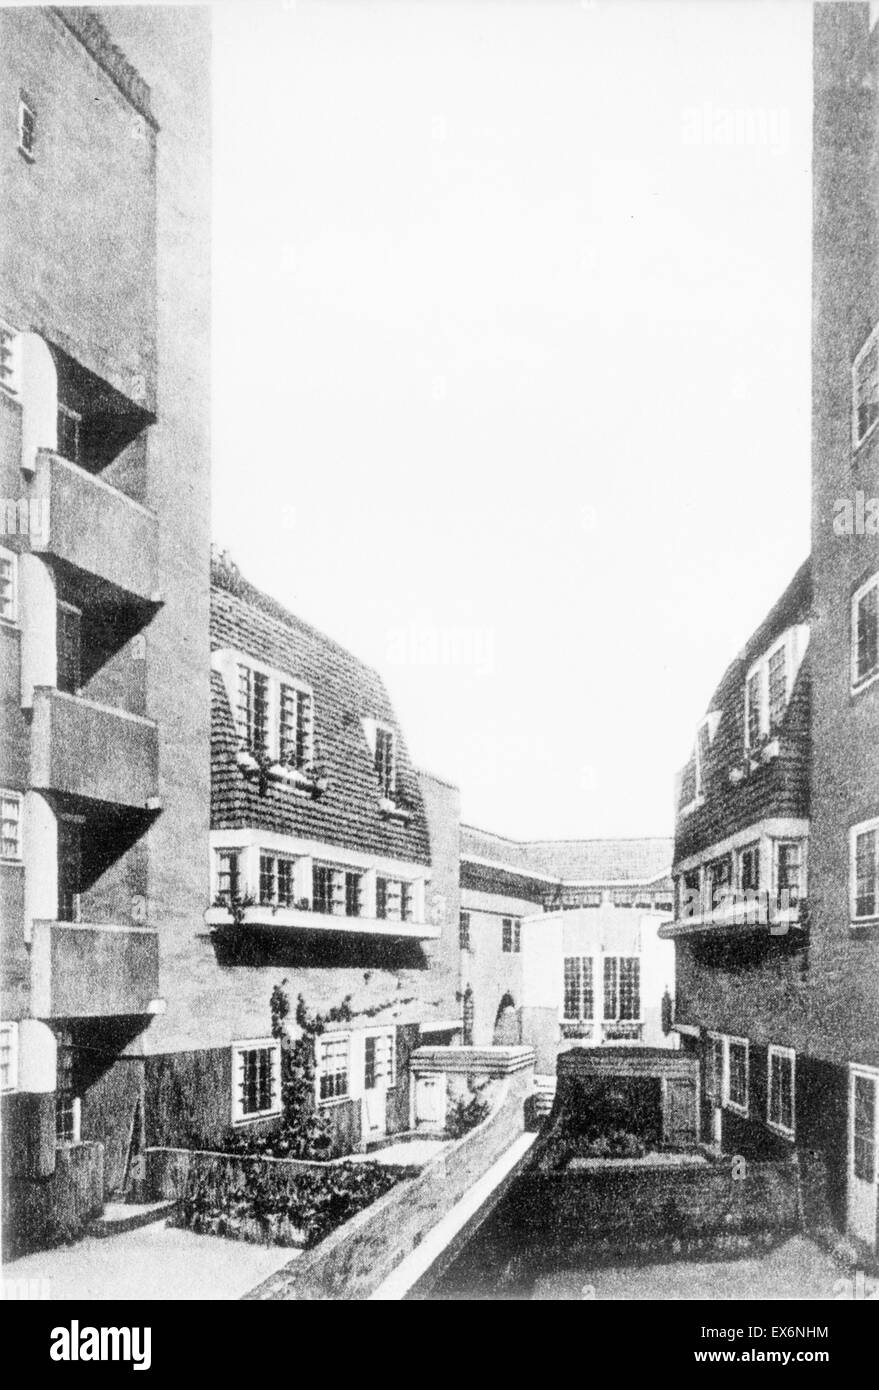 Apartments for workers of the 'Einge Haard' Housing Association, near the Spaarndammerplantsoen, Amsterdam, Netherlands. Designed by M. De Klerk Stock Photo